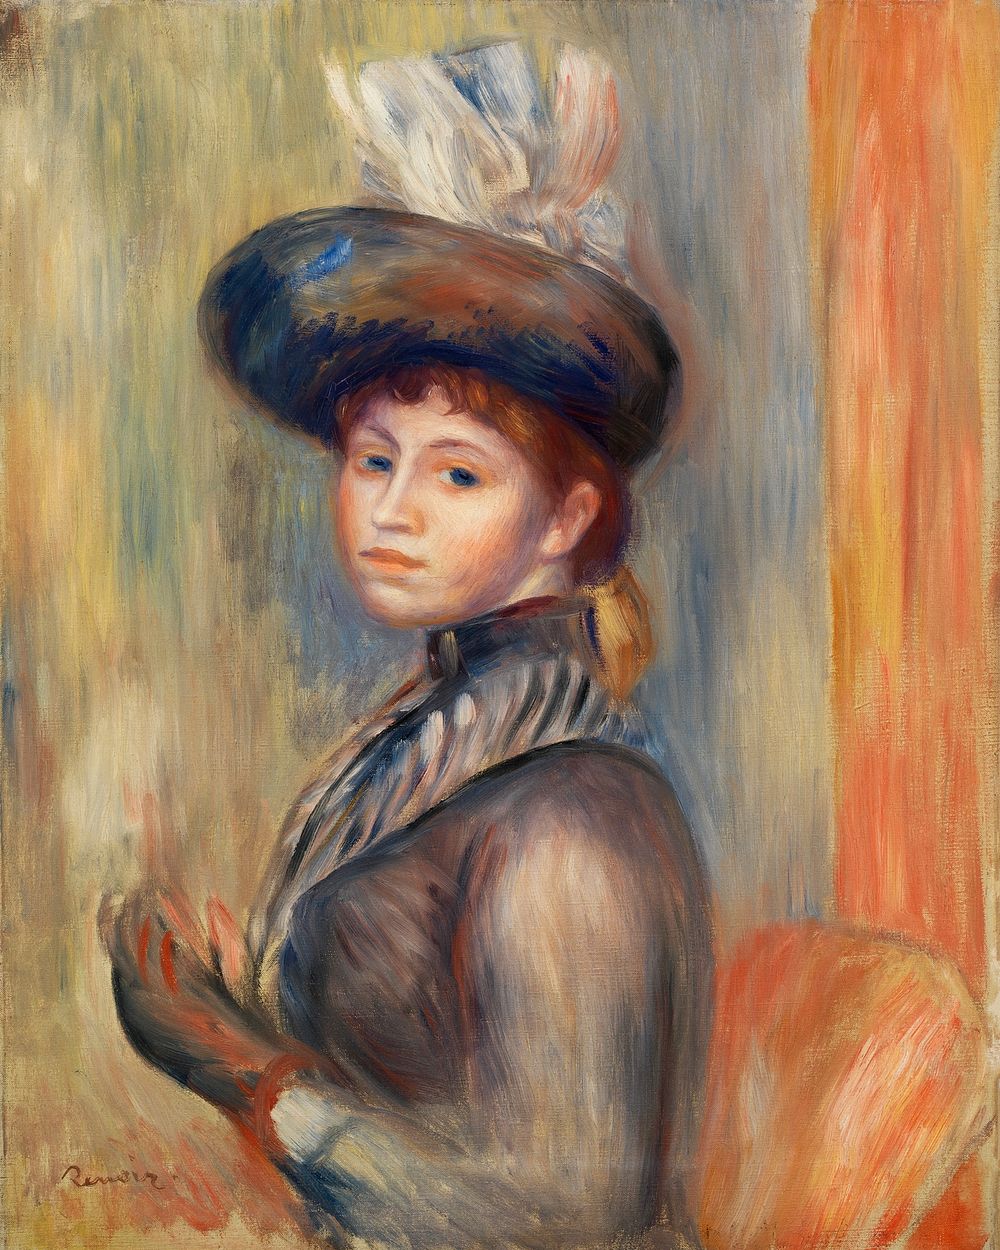 Girl in Gray-Blue (1889) by Pierre-Auguste Renoir. Original from Barnes Foundation. Digitally enhanced by rawpixel.